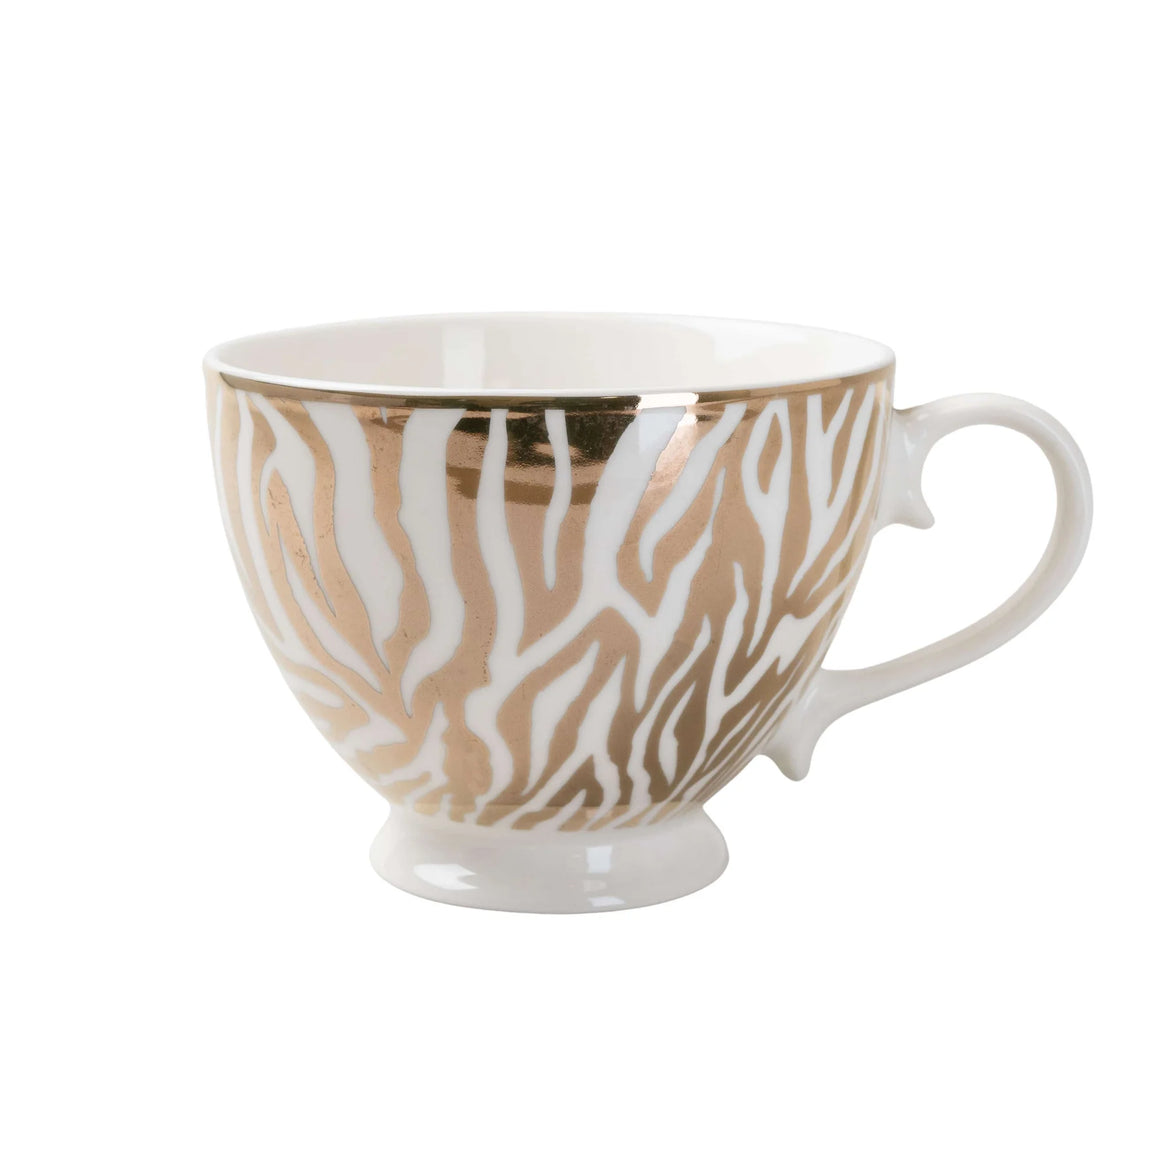 Gold Zebra Print Mug from Candlelight